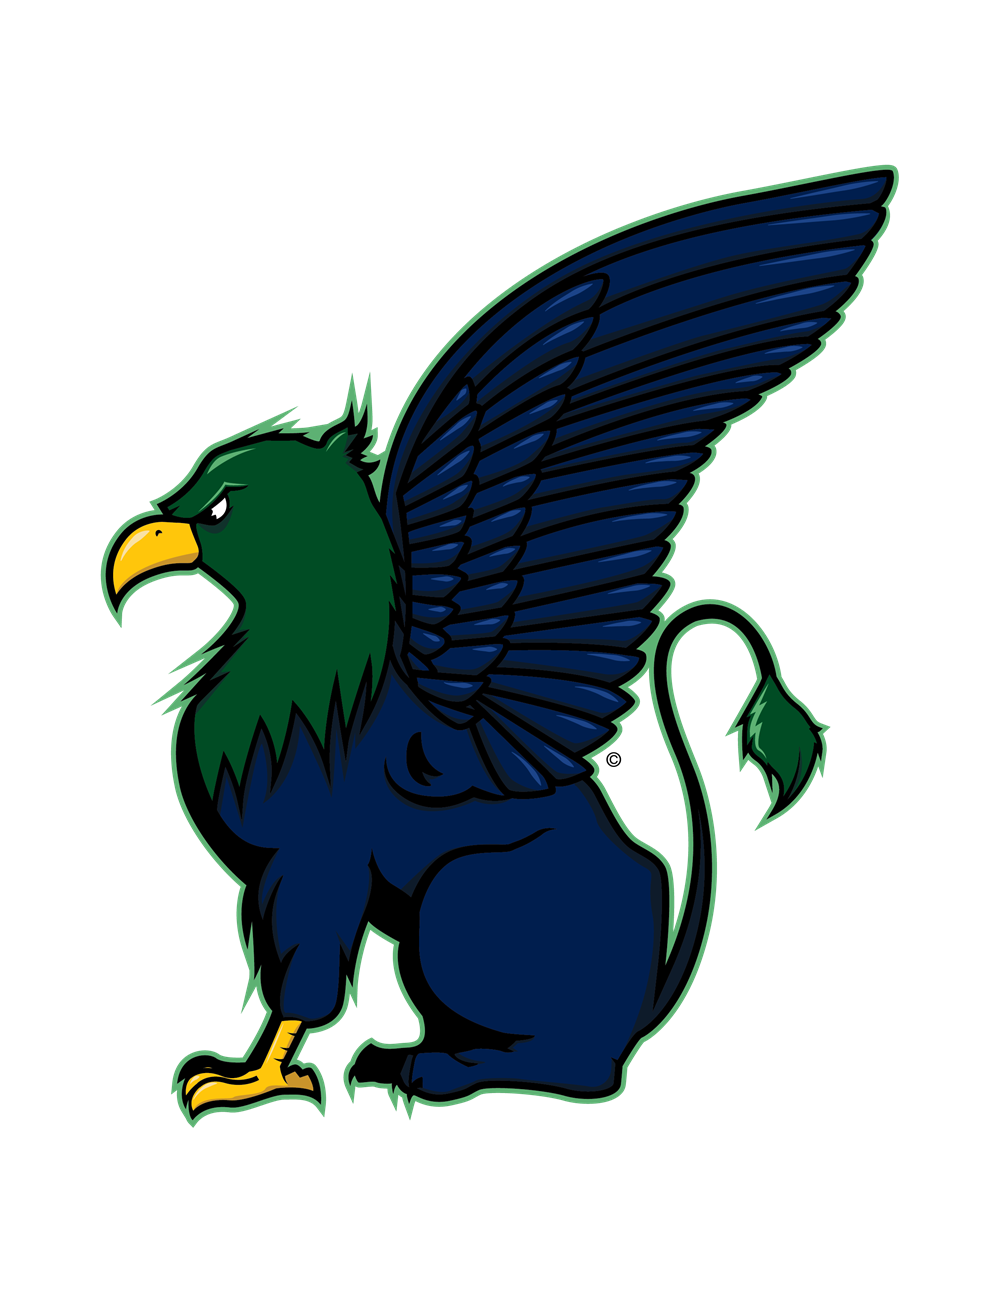 Image of school mascot